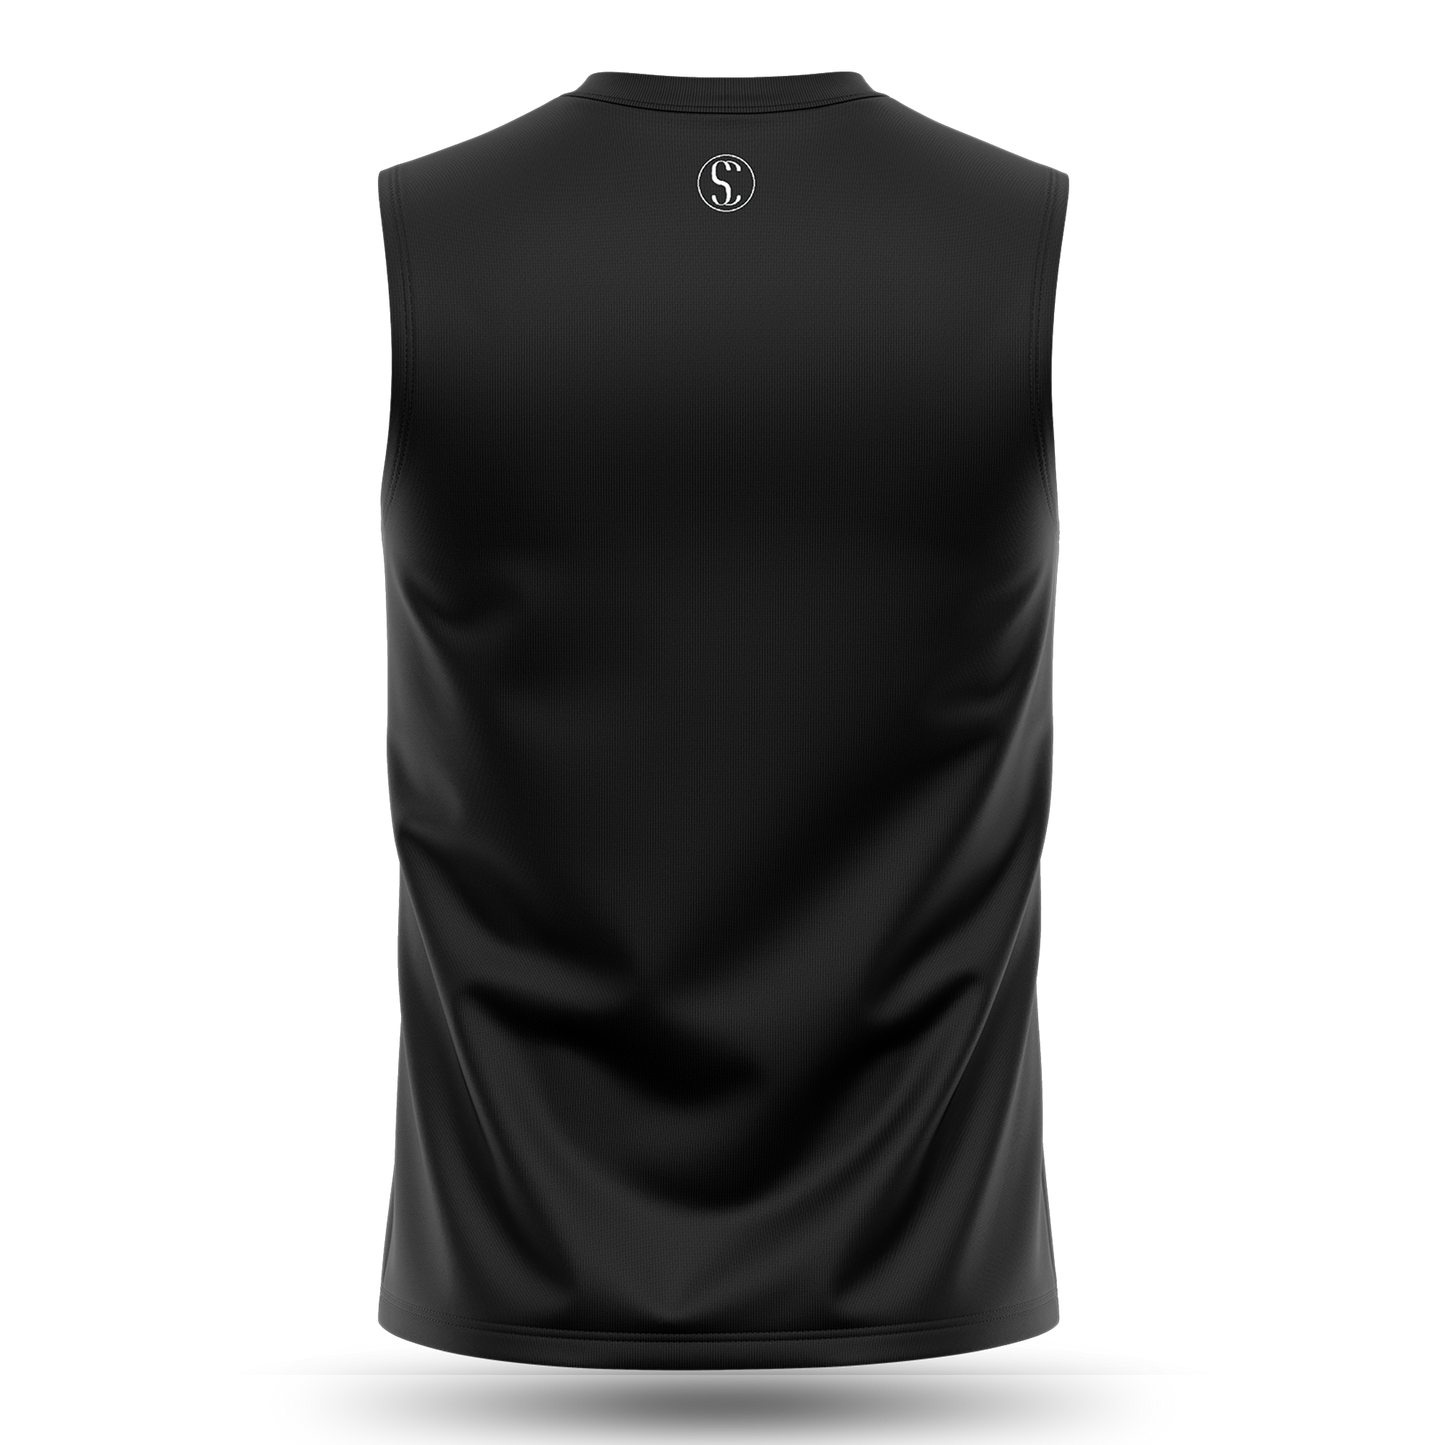 Men's Black Cotton Tank Top Sleeveless Shirt